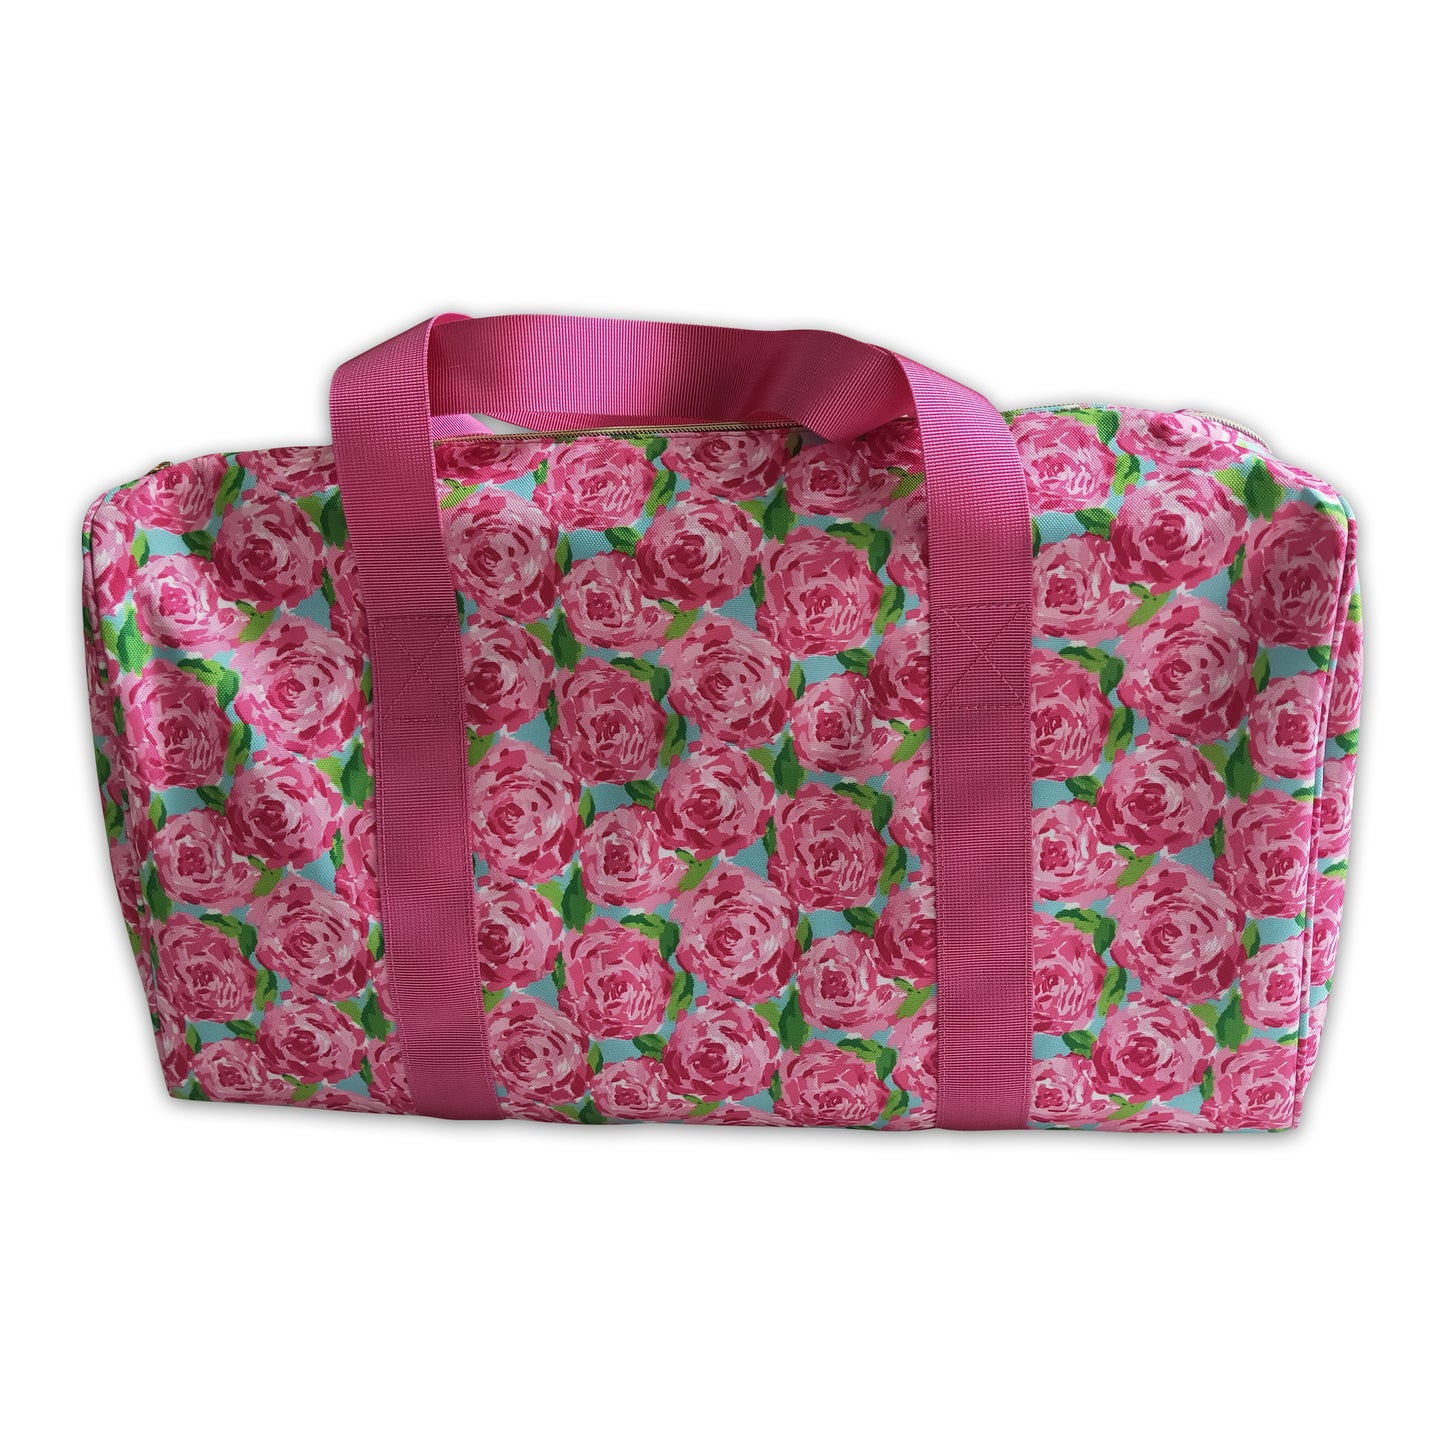 Pink floral print travel bags